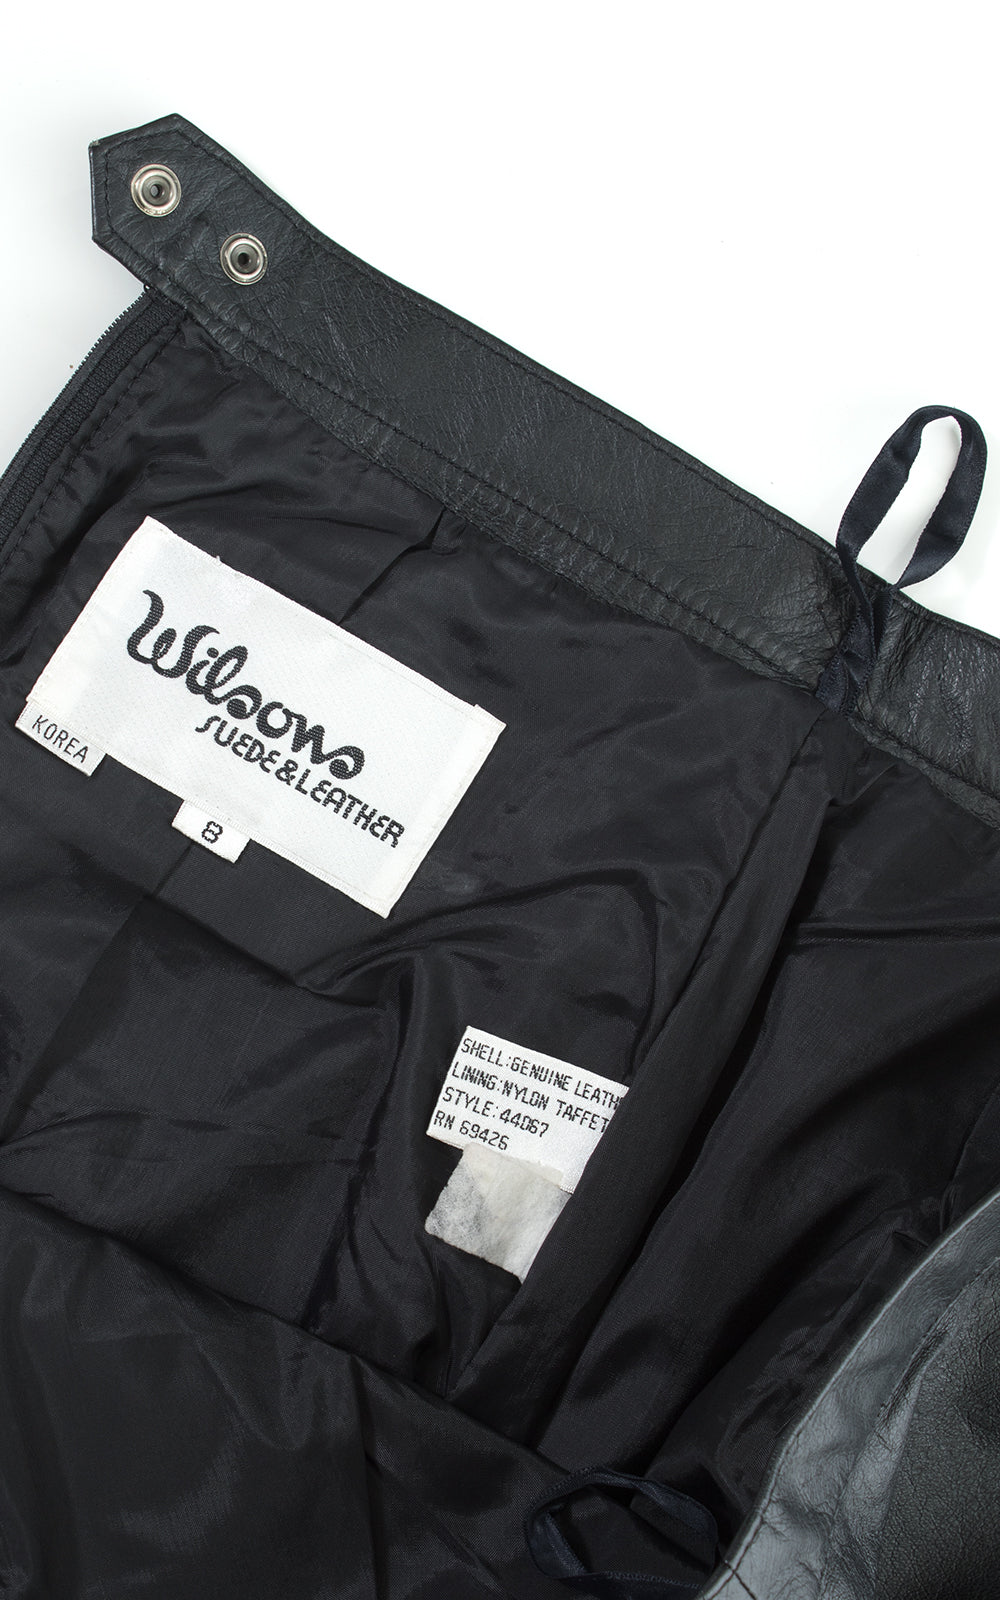 1980s Wilsons Black Leather Snap Slit Pencil Skirt